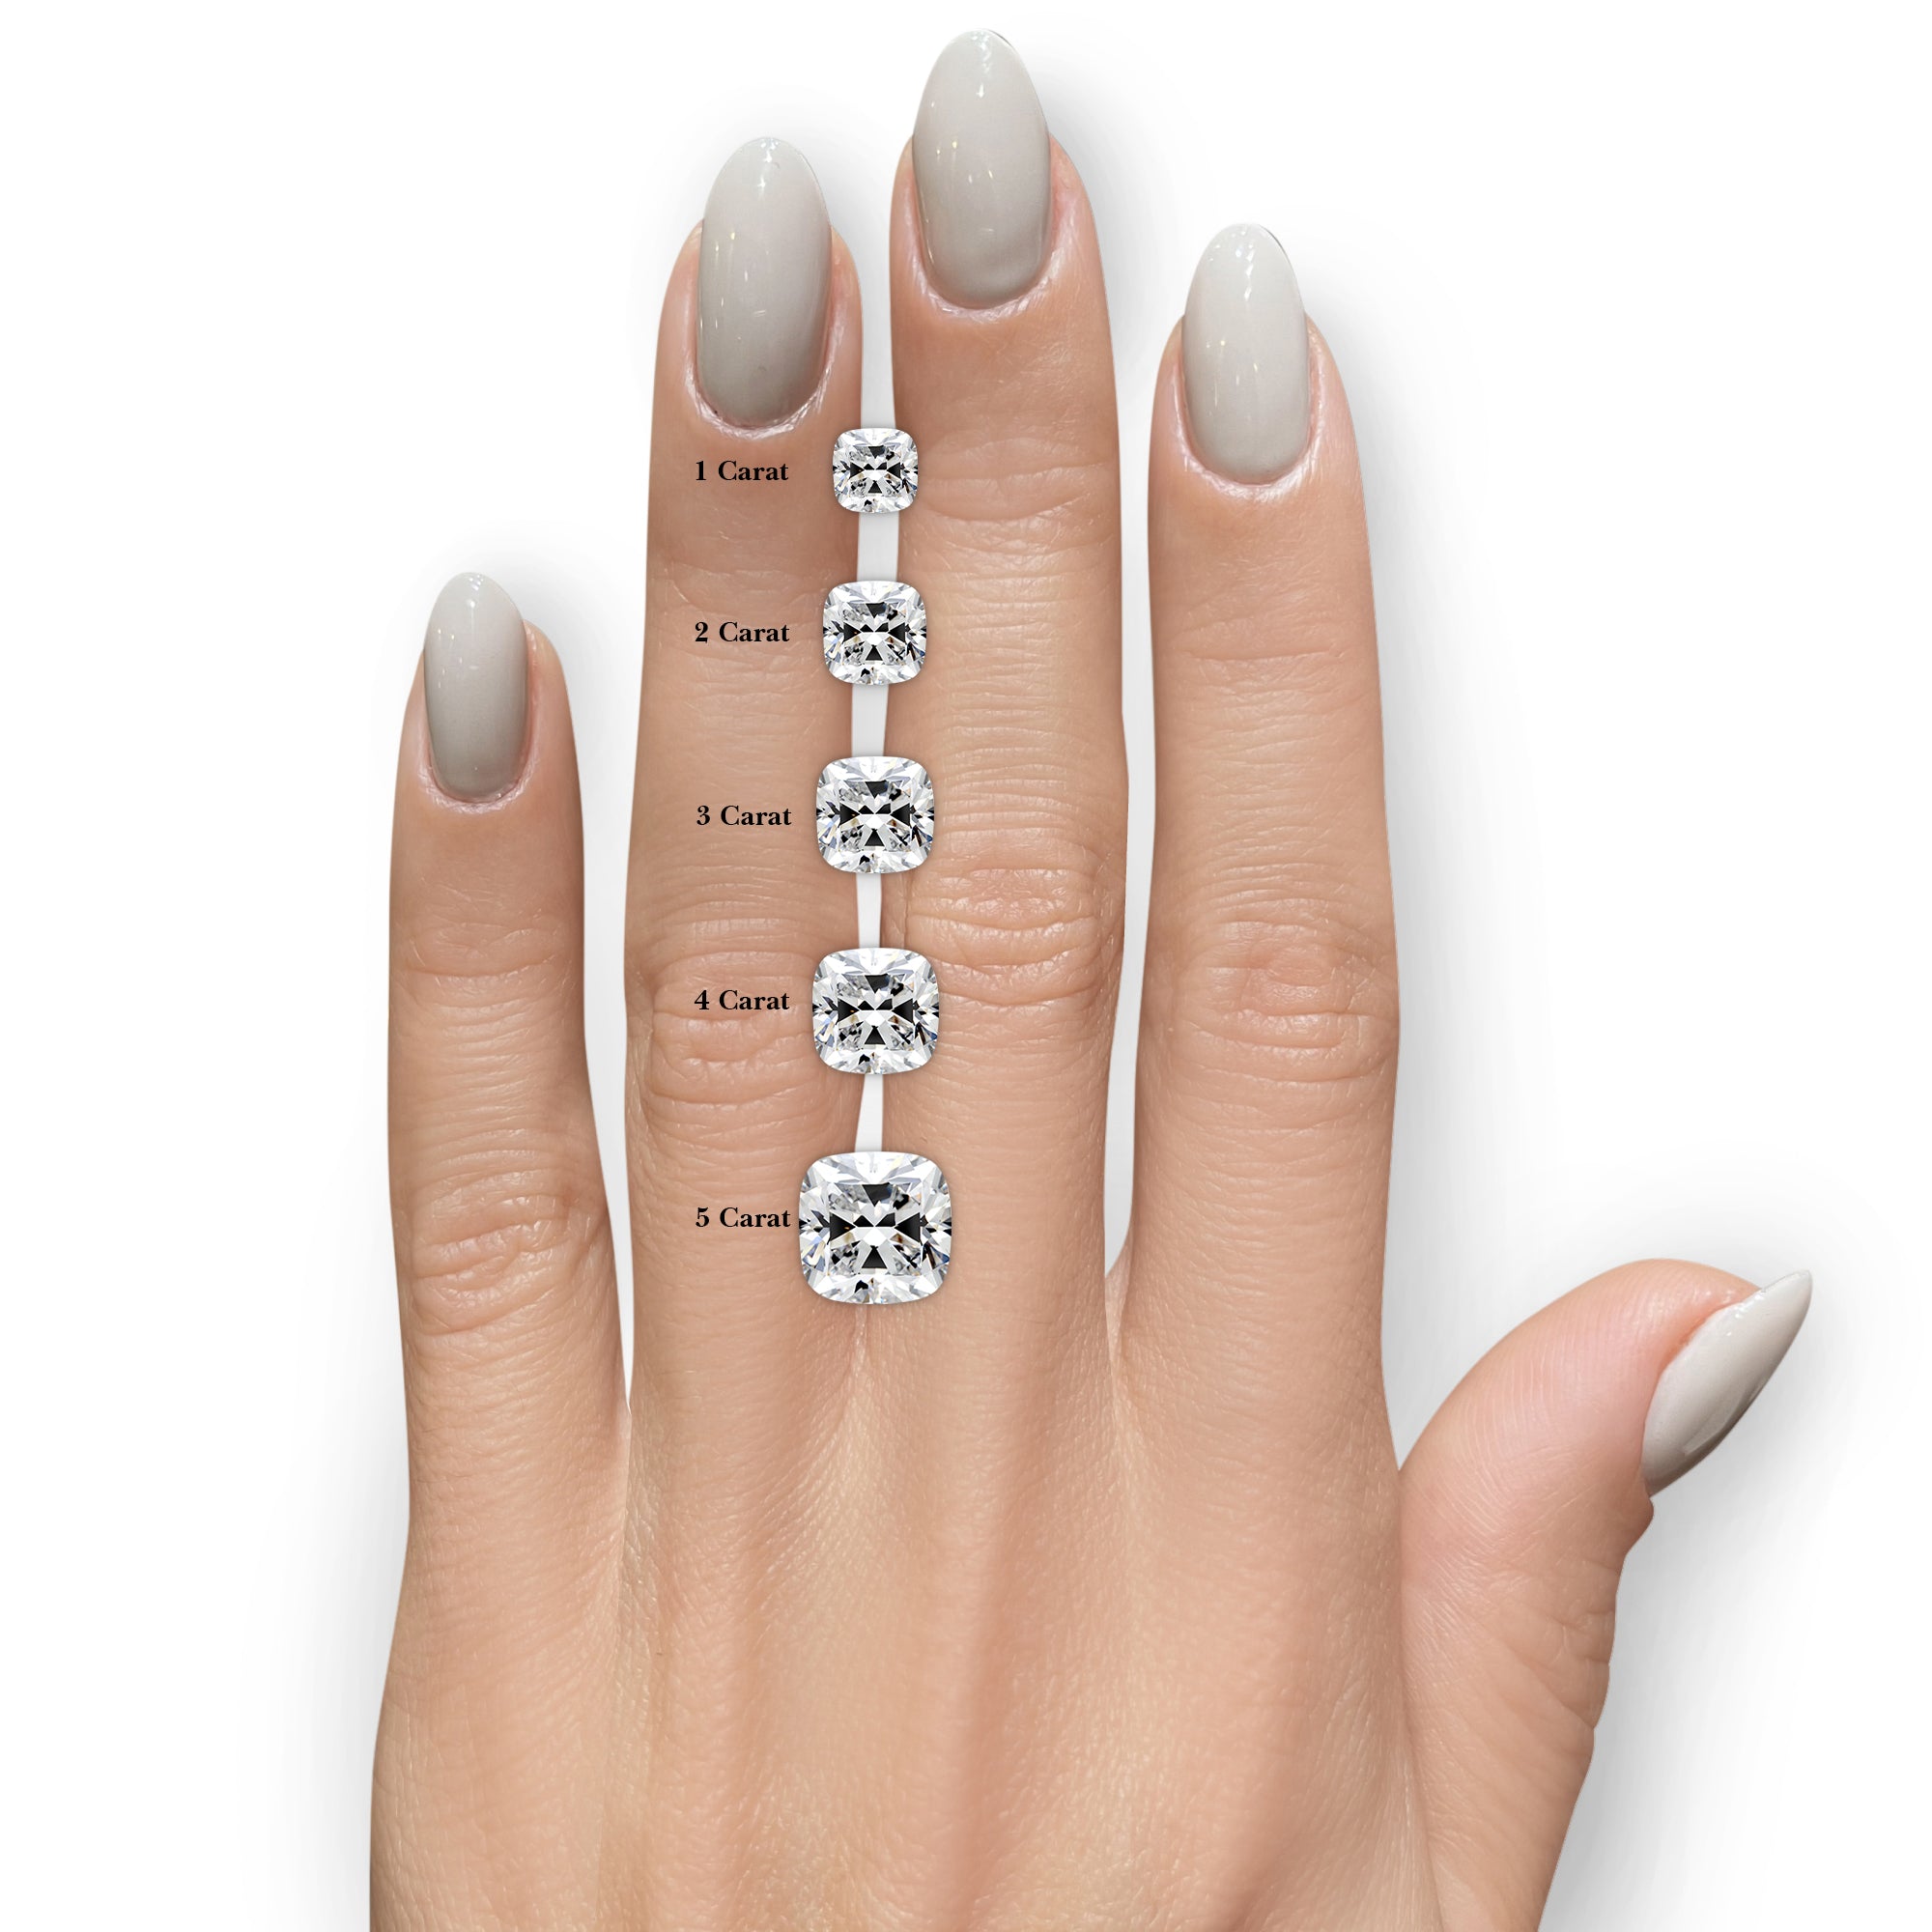 Bailey Diamond Engagement Ring -14K Rose Gold